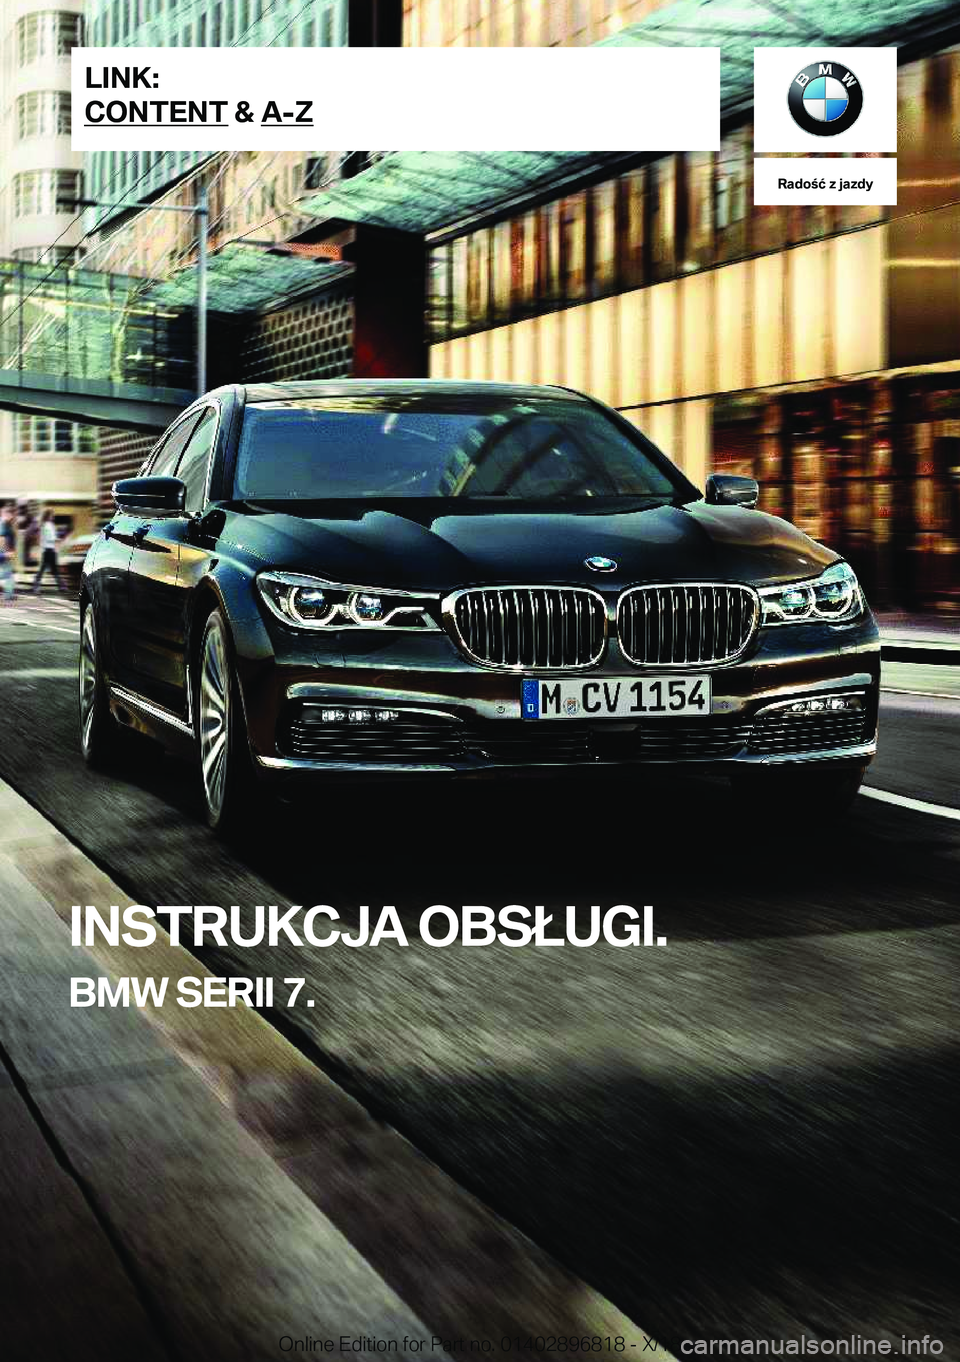 BMW 7 SERIES 2019  Instrukcja obsługi (in Polish) �R�a�d�o�ć��z��j�a�z�d�y
�I�N�S�T�R�U�K�C�J�A��O�B�S�Ł�U�G�I�.
�B�M�W��S�E�R�I�I��7�.�L�I�N�K�:
�C�O�N�T�E�N�T��&��A�-�Z�O�n�l�i�n�e��E�d�i�t�i�o�n��f�o�r��P�a�r�t��n�o�.��0�1�4�0�2�8�